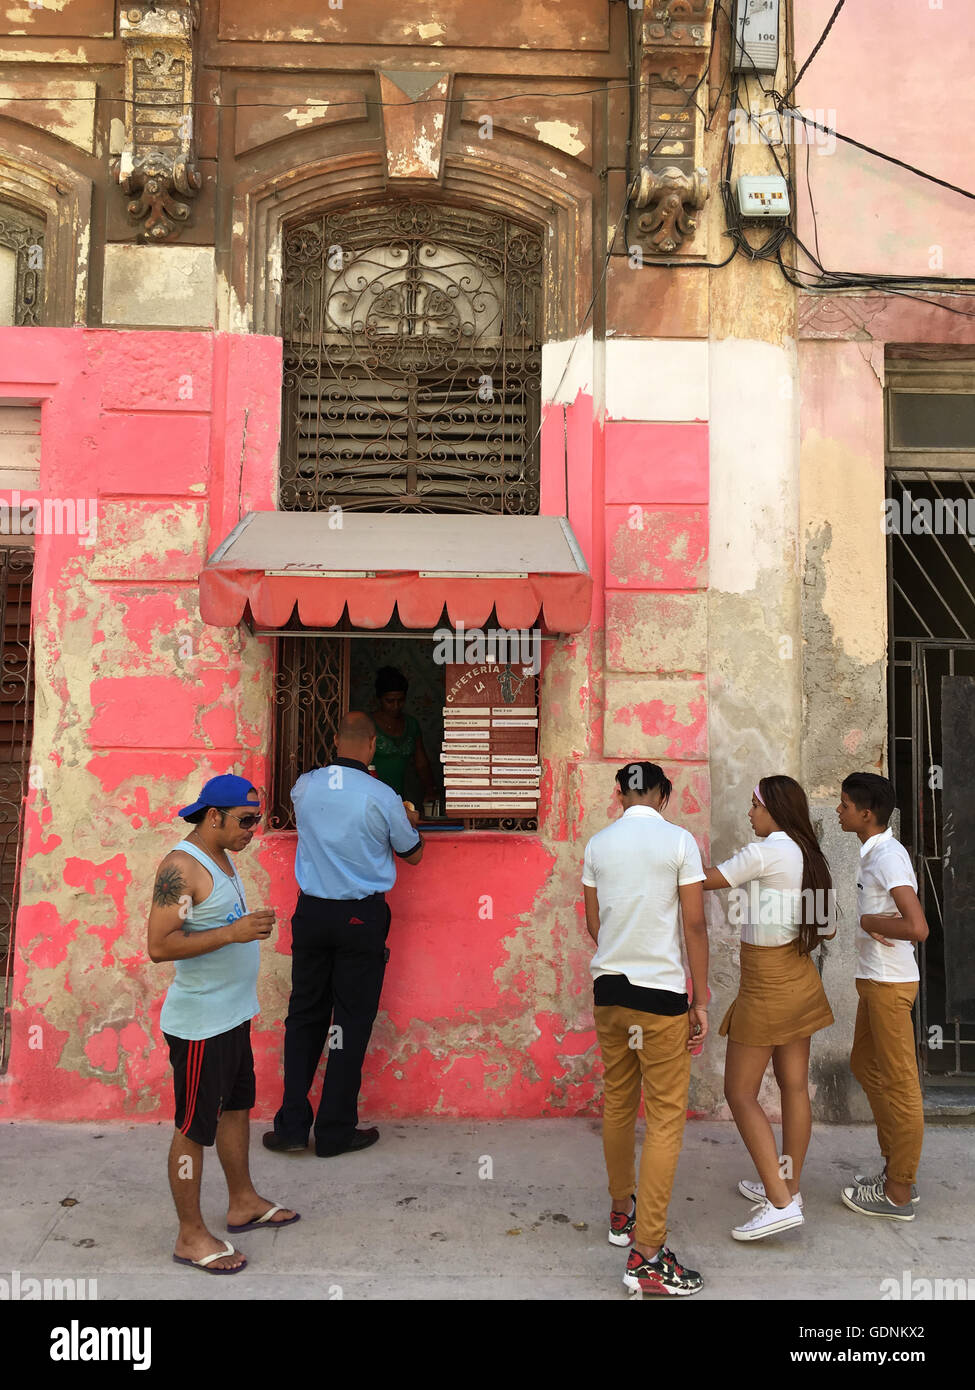 People including school children in uniform gather by a food kiosk in Havana Cuba Stock Photo